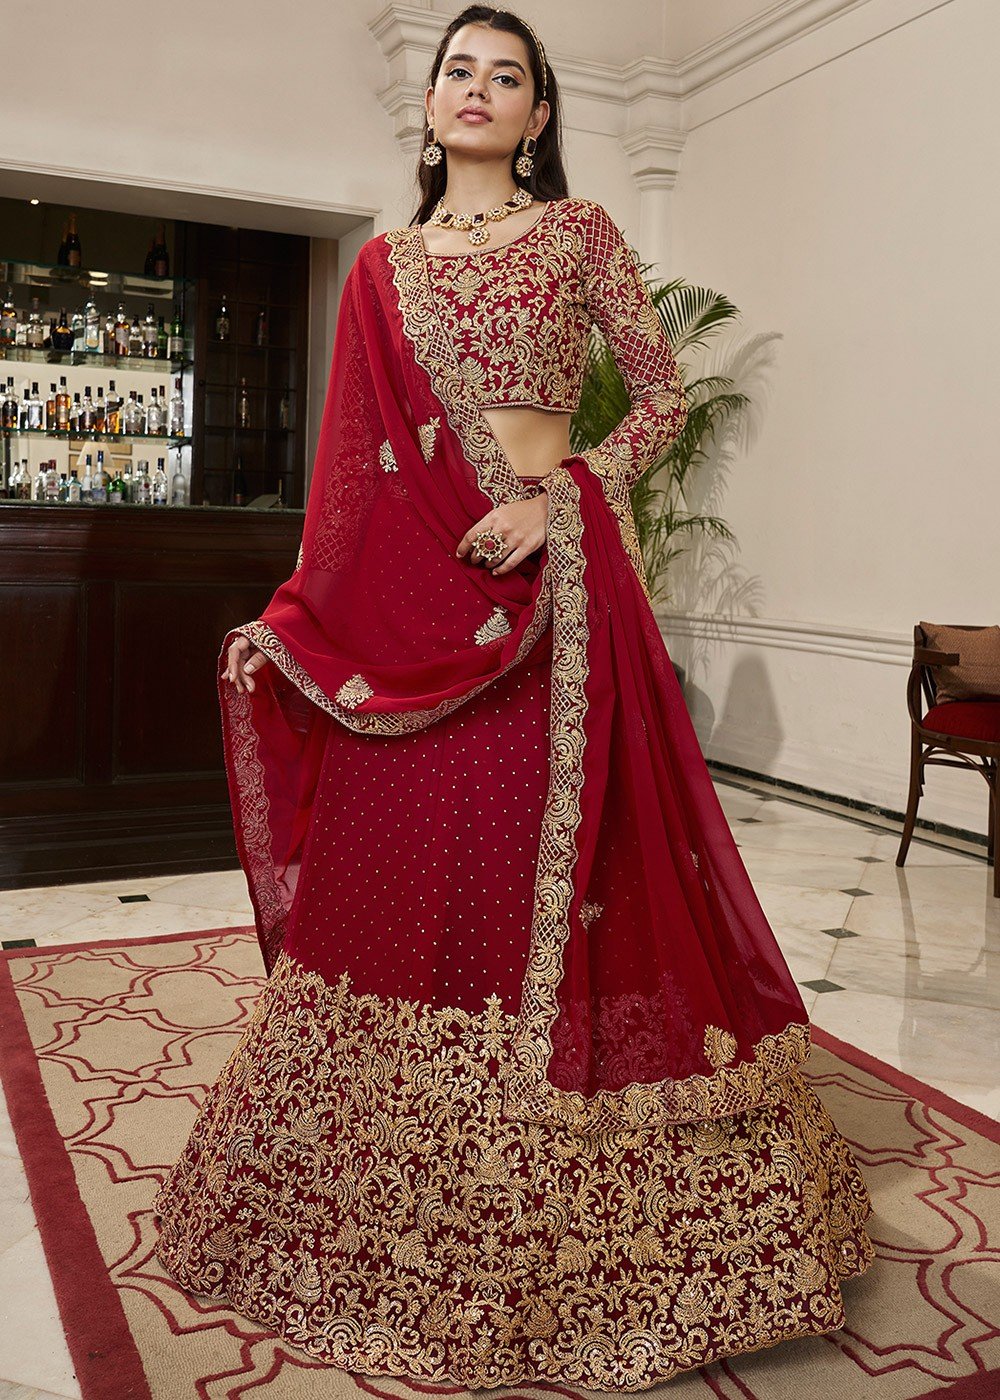 Maroon Bridal Lehenga Choli Shawl Indian Ethnic Wedding Wear Lengha Sari  Lehanga | eBay